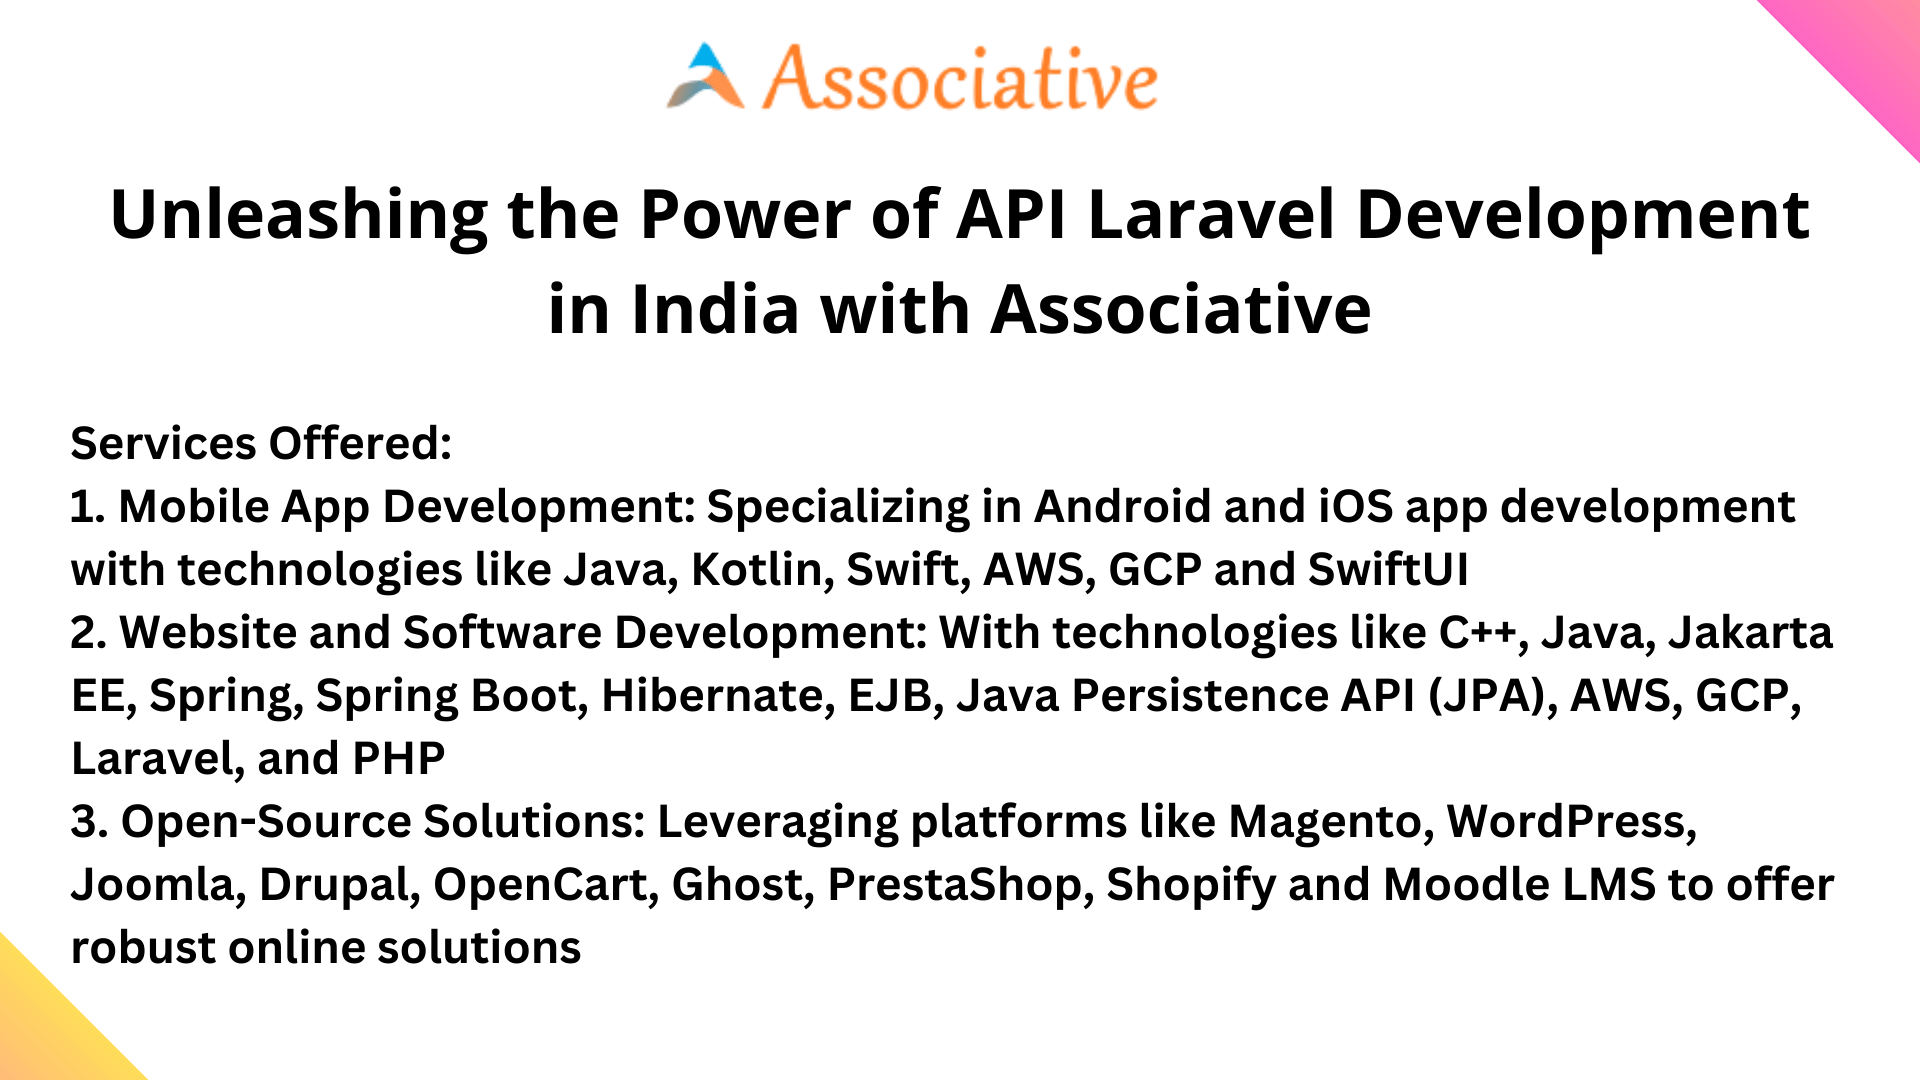 Unleashing the Power of API Laravel Development in India with Associative